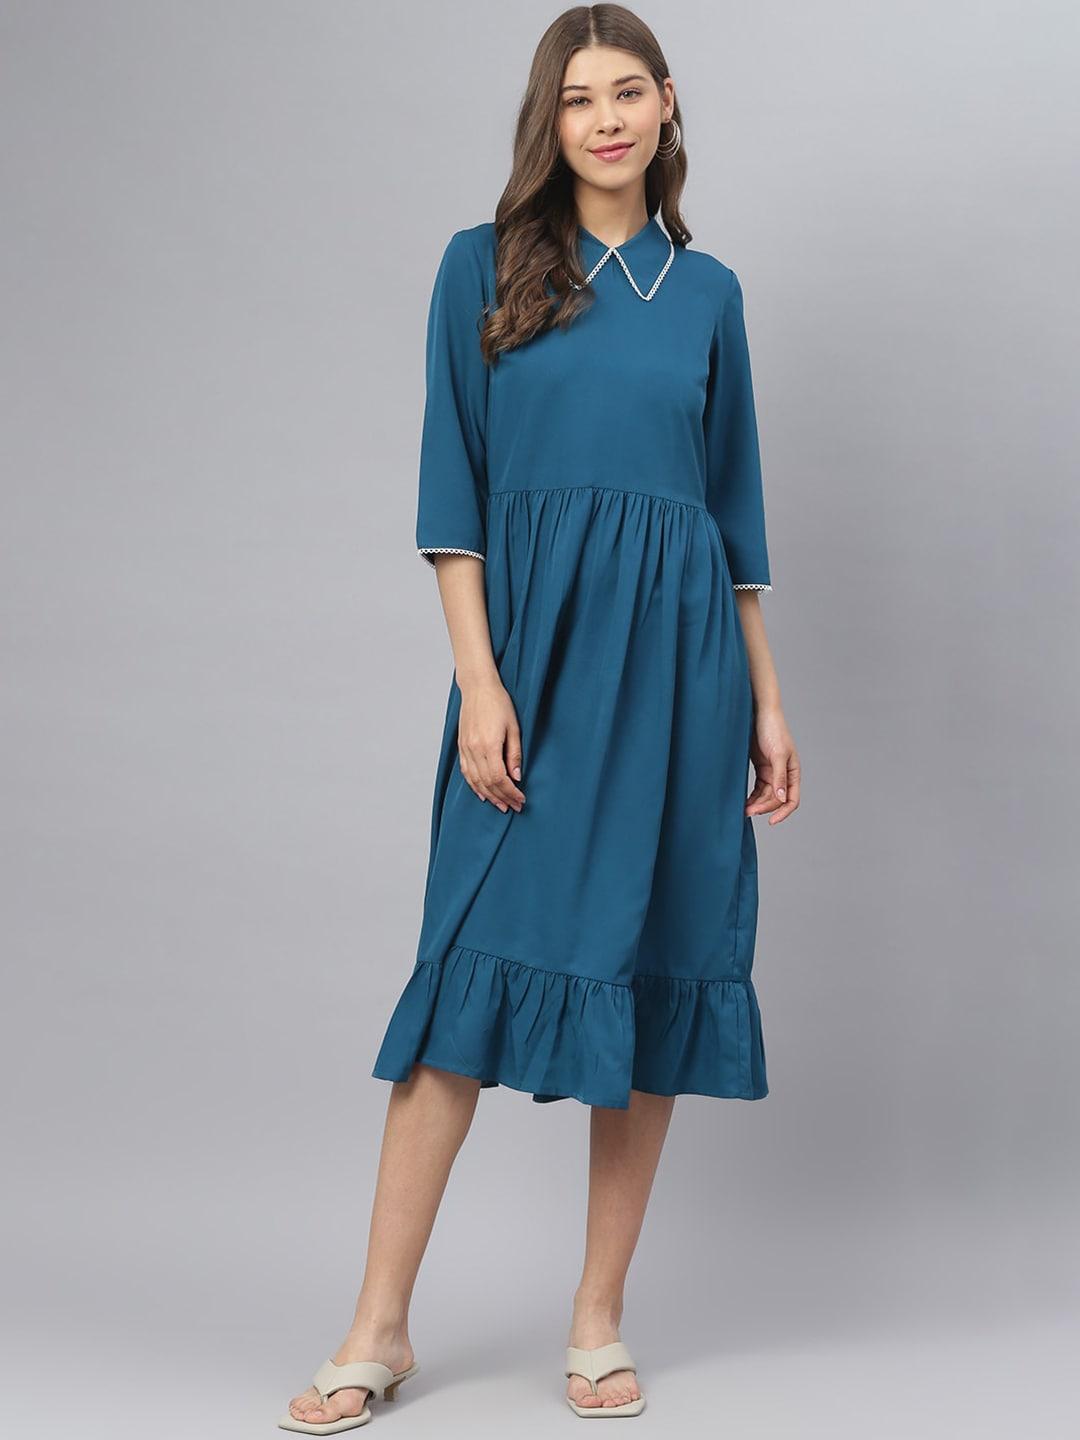 DEEBACO Turquoise Blue Solid Midi Dress